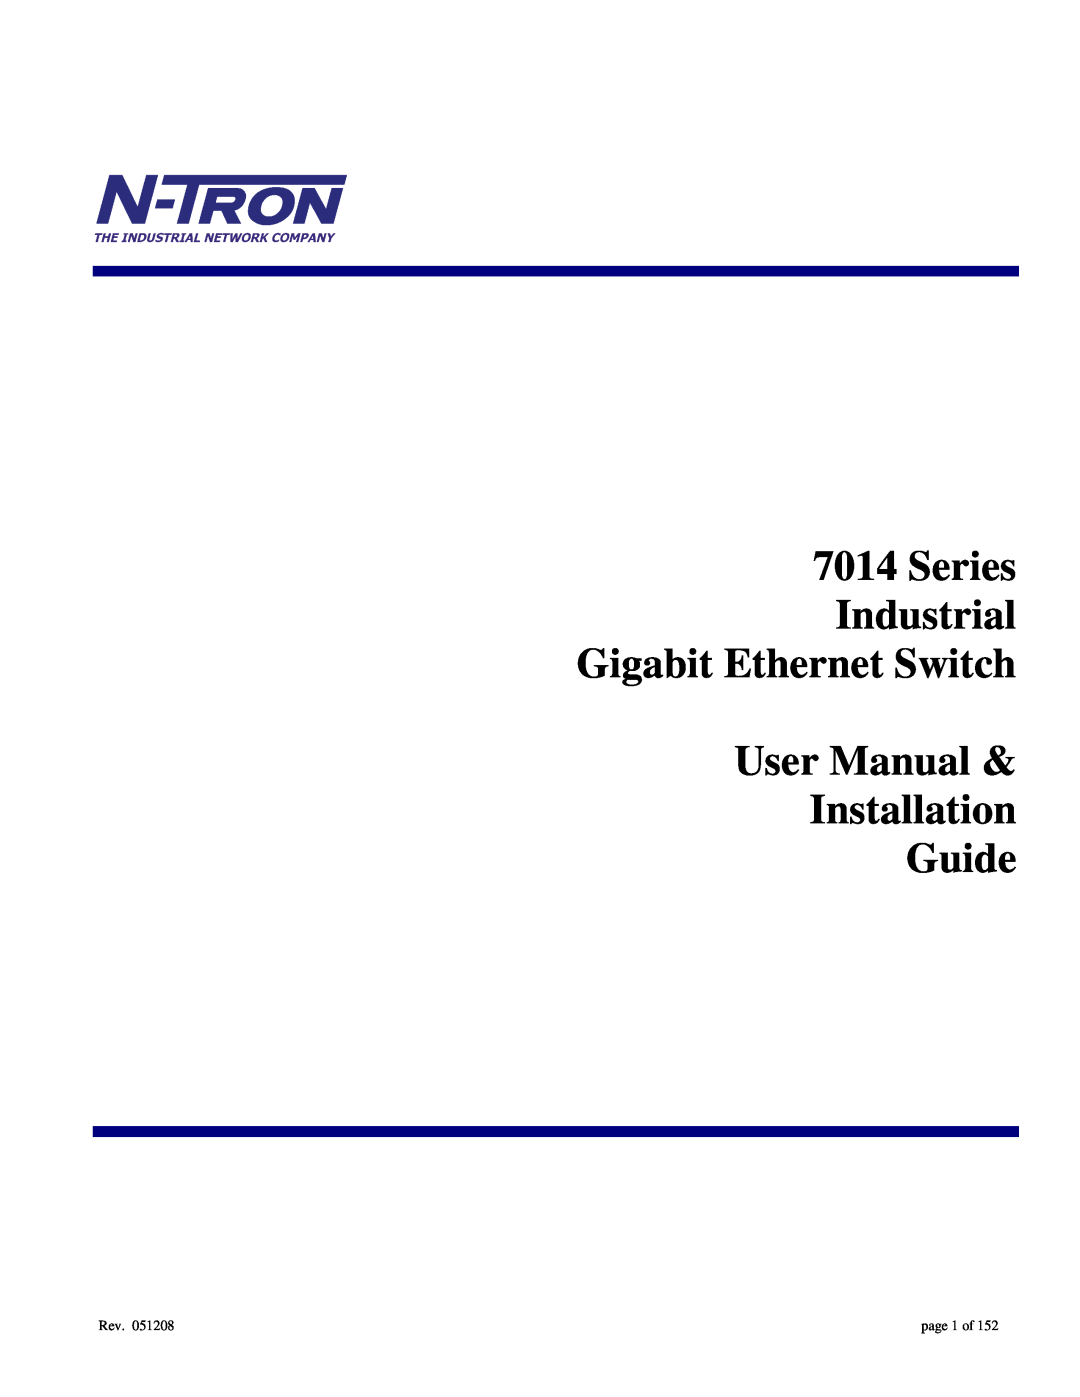 Gigabyte 7014 user manual Series Industrial Gigabit Ethernet Switch User Manual, Installation Guide 